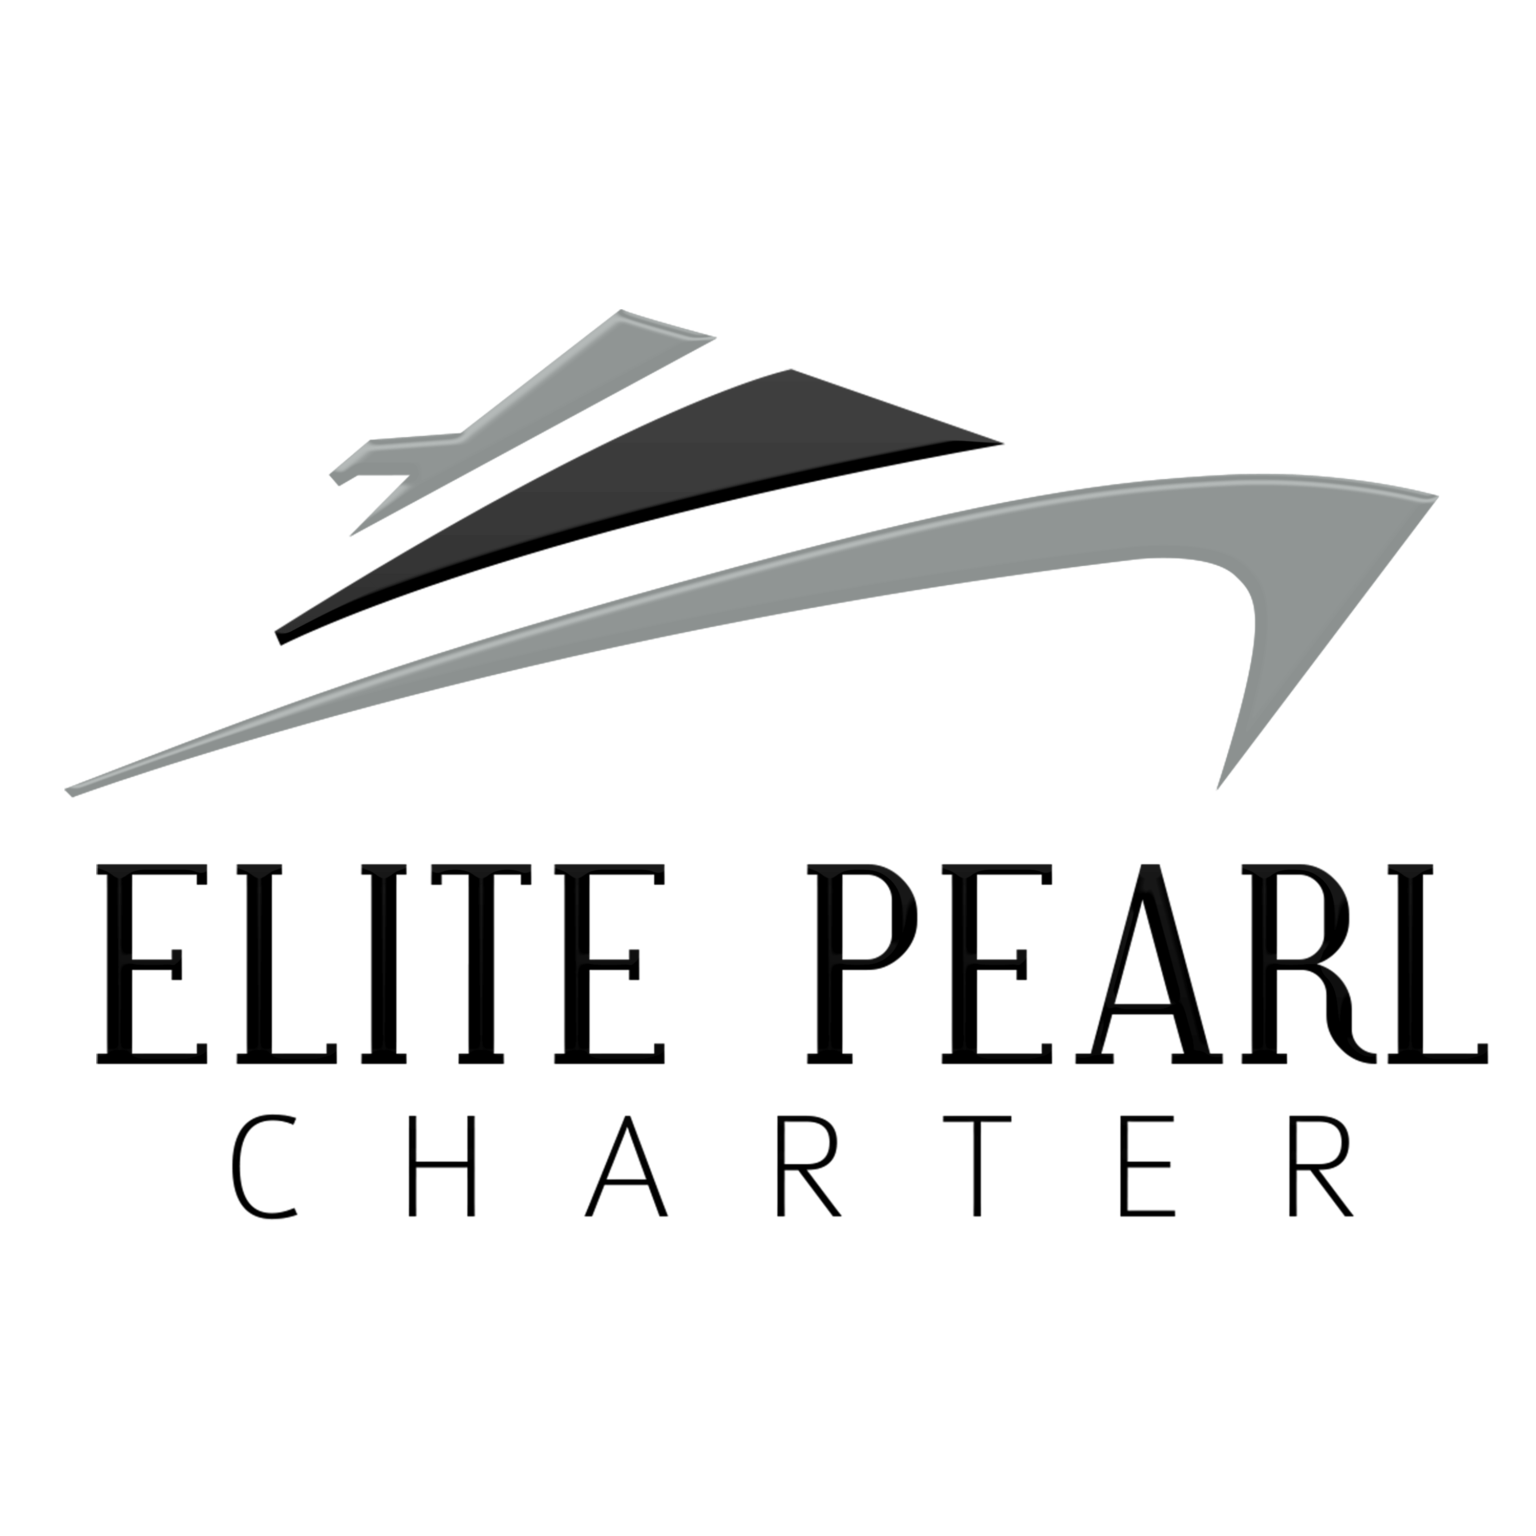 elite pearl charter - logo large